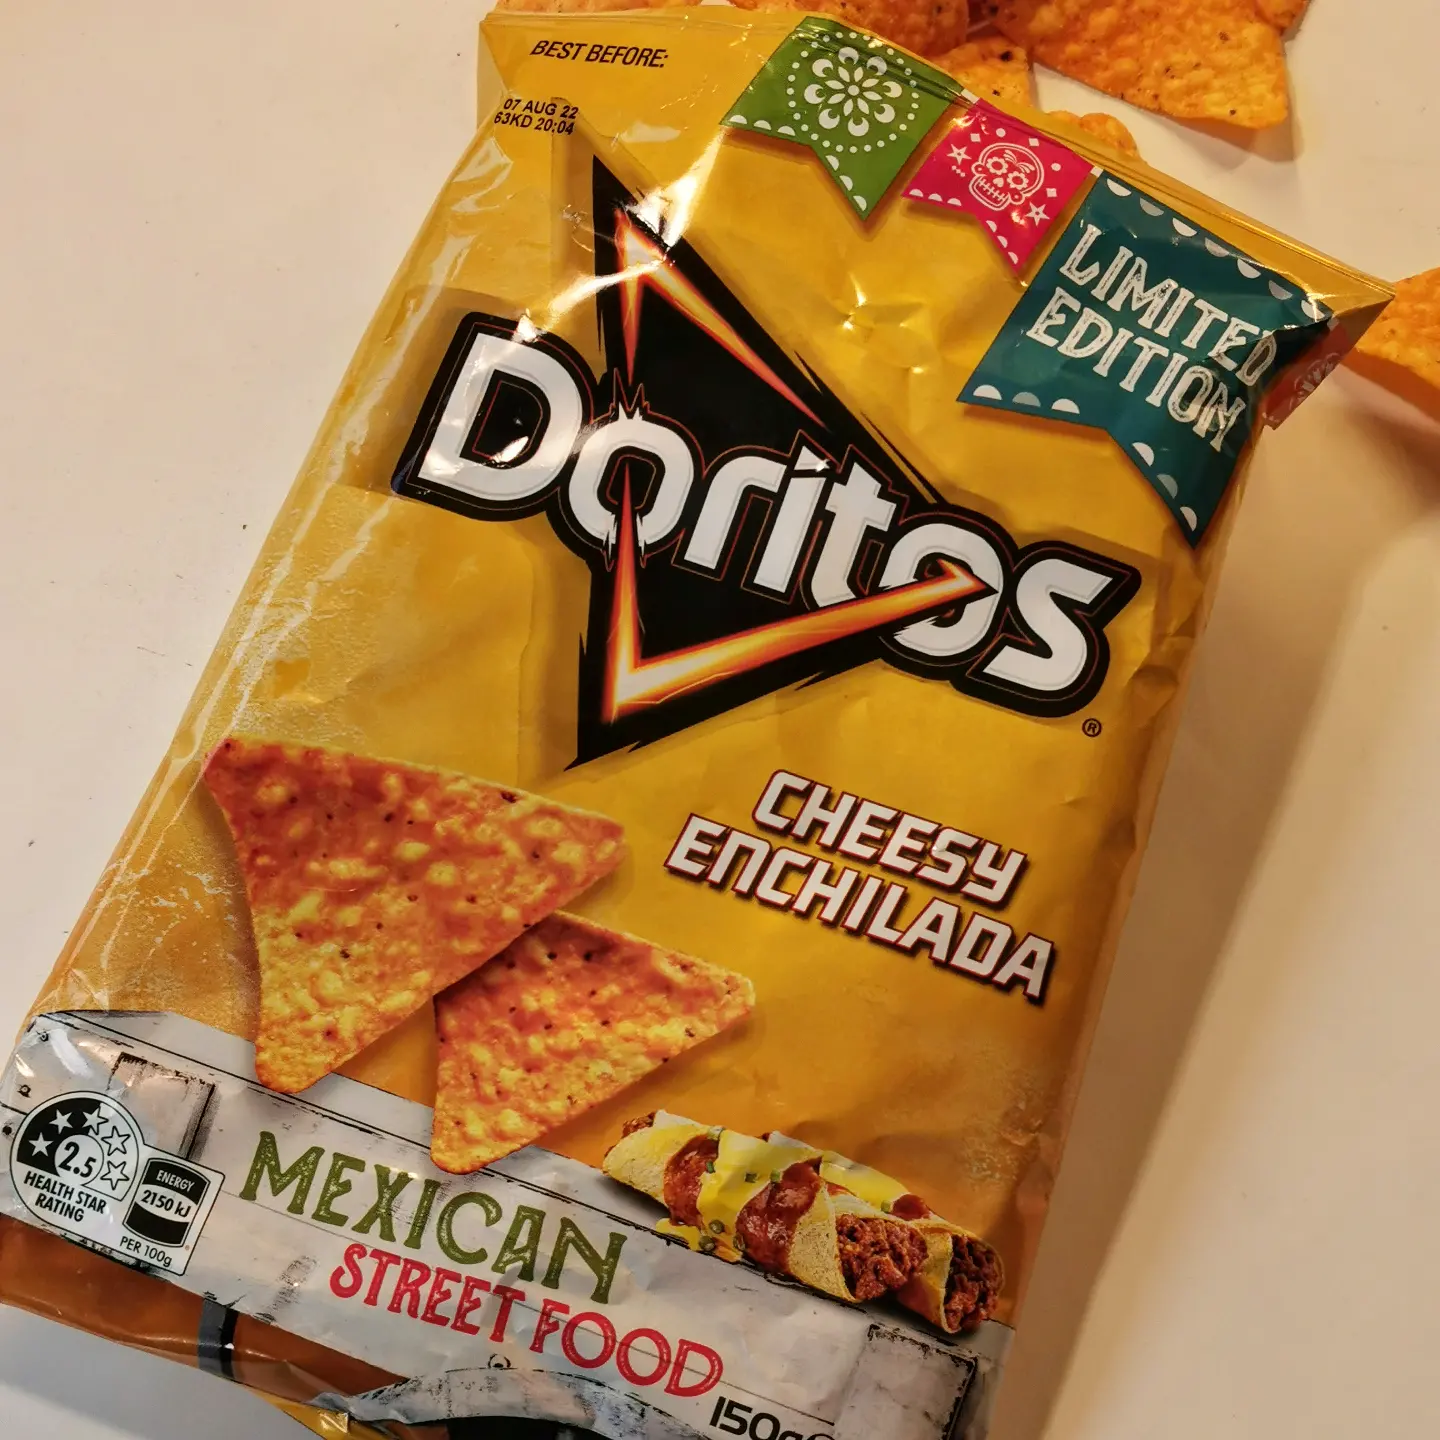 Doritos – Mexican Street Food – Cheesy Enchilada